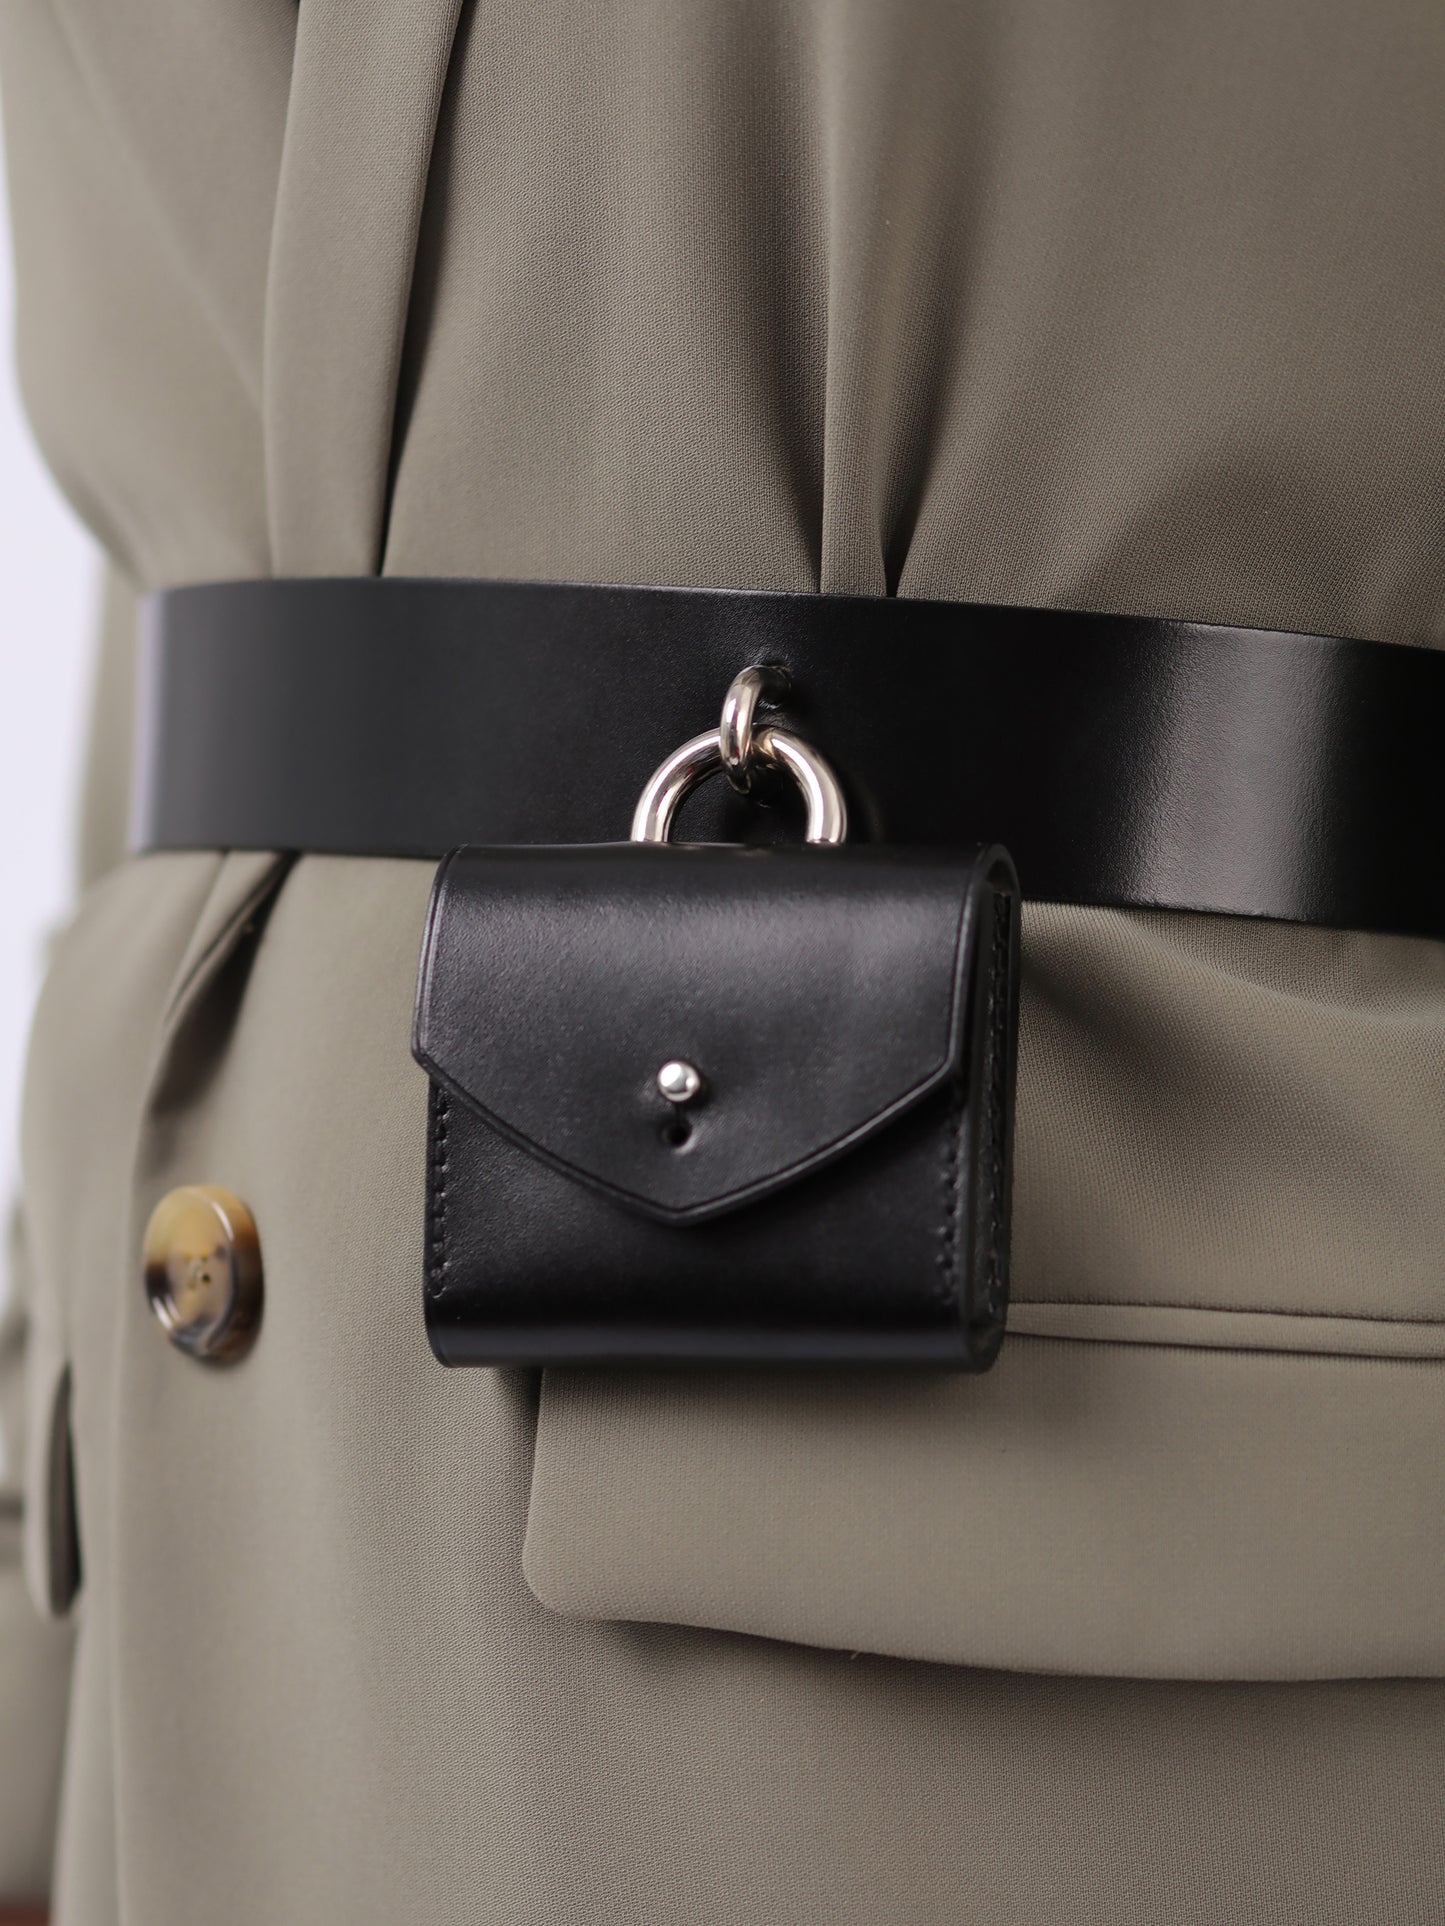 Detaile view of Micro Waist Belt Bag